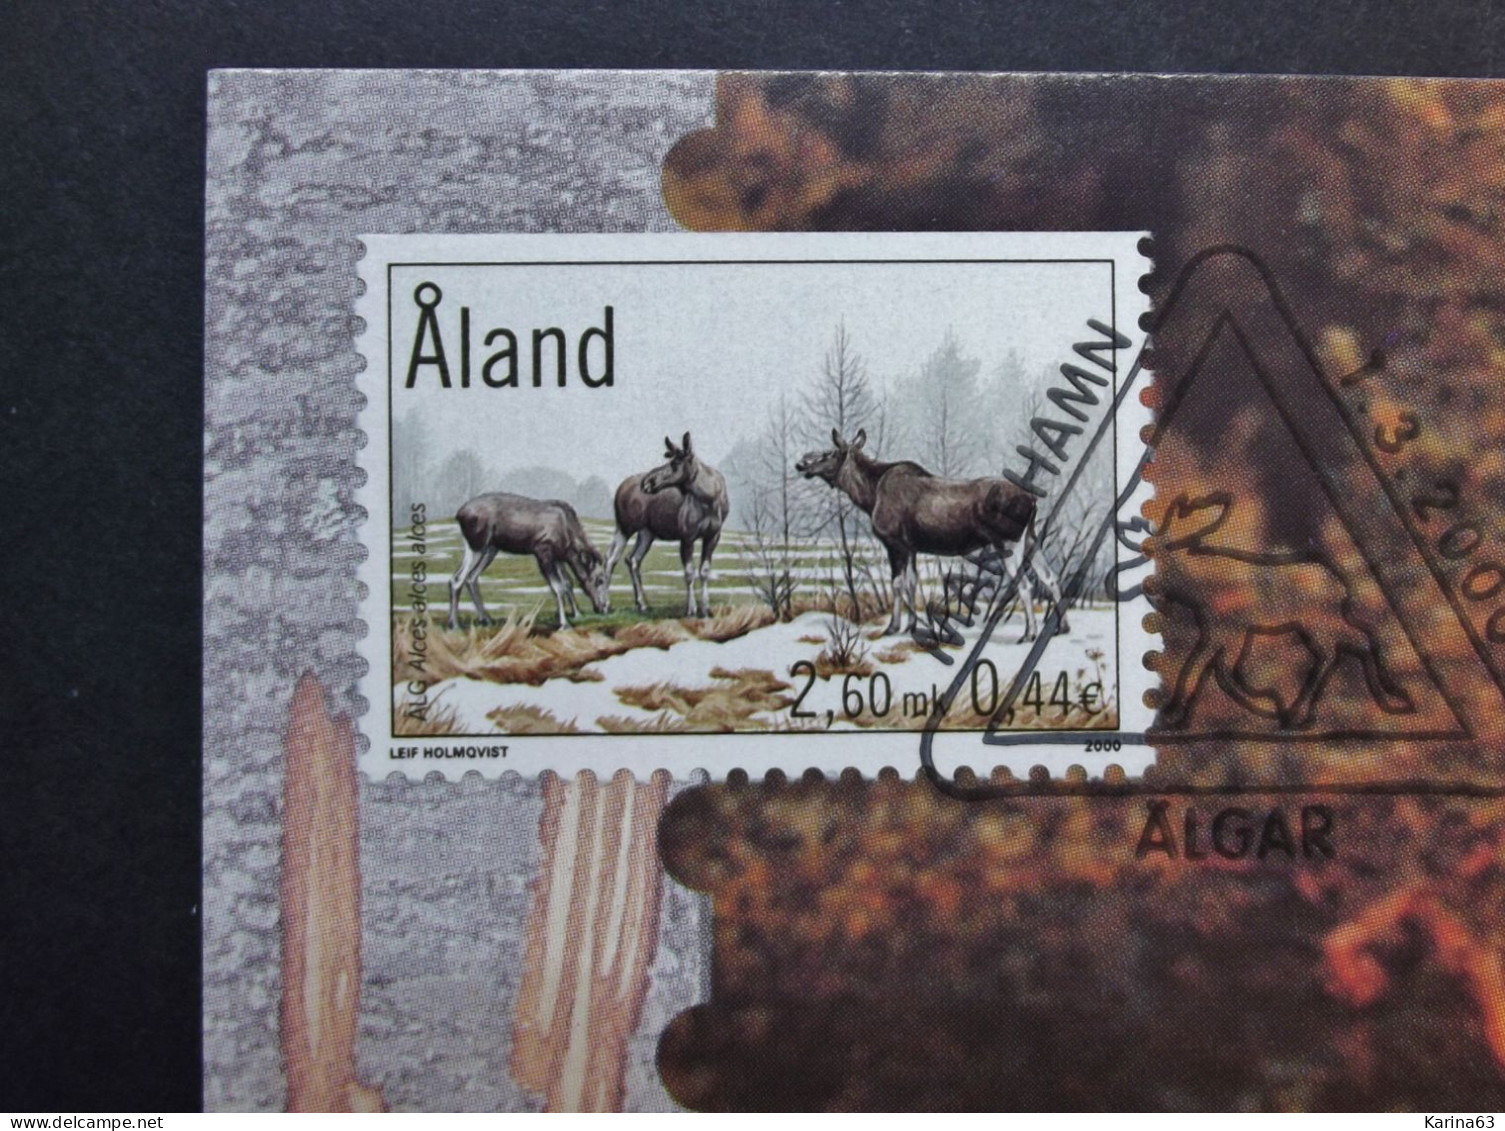 Aland - 2000 - Maxicard - Stamp N° 171 - Card N° 31 - Elks - Deer  Wild Life - Nature - Mariehamn / Algar FDC 01/03/2000 - Aland